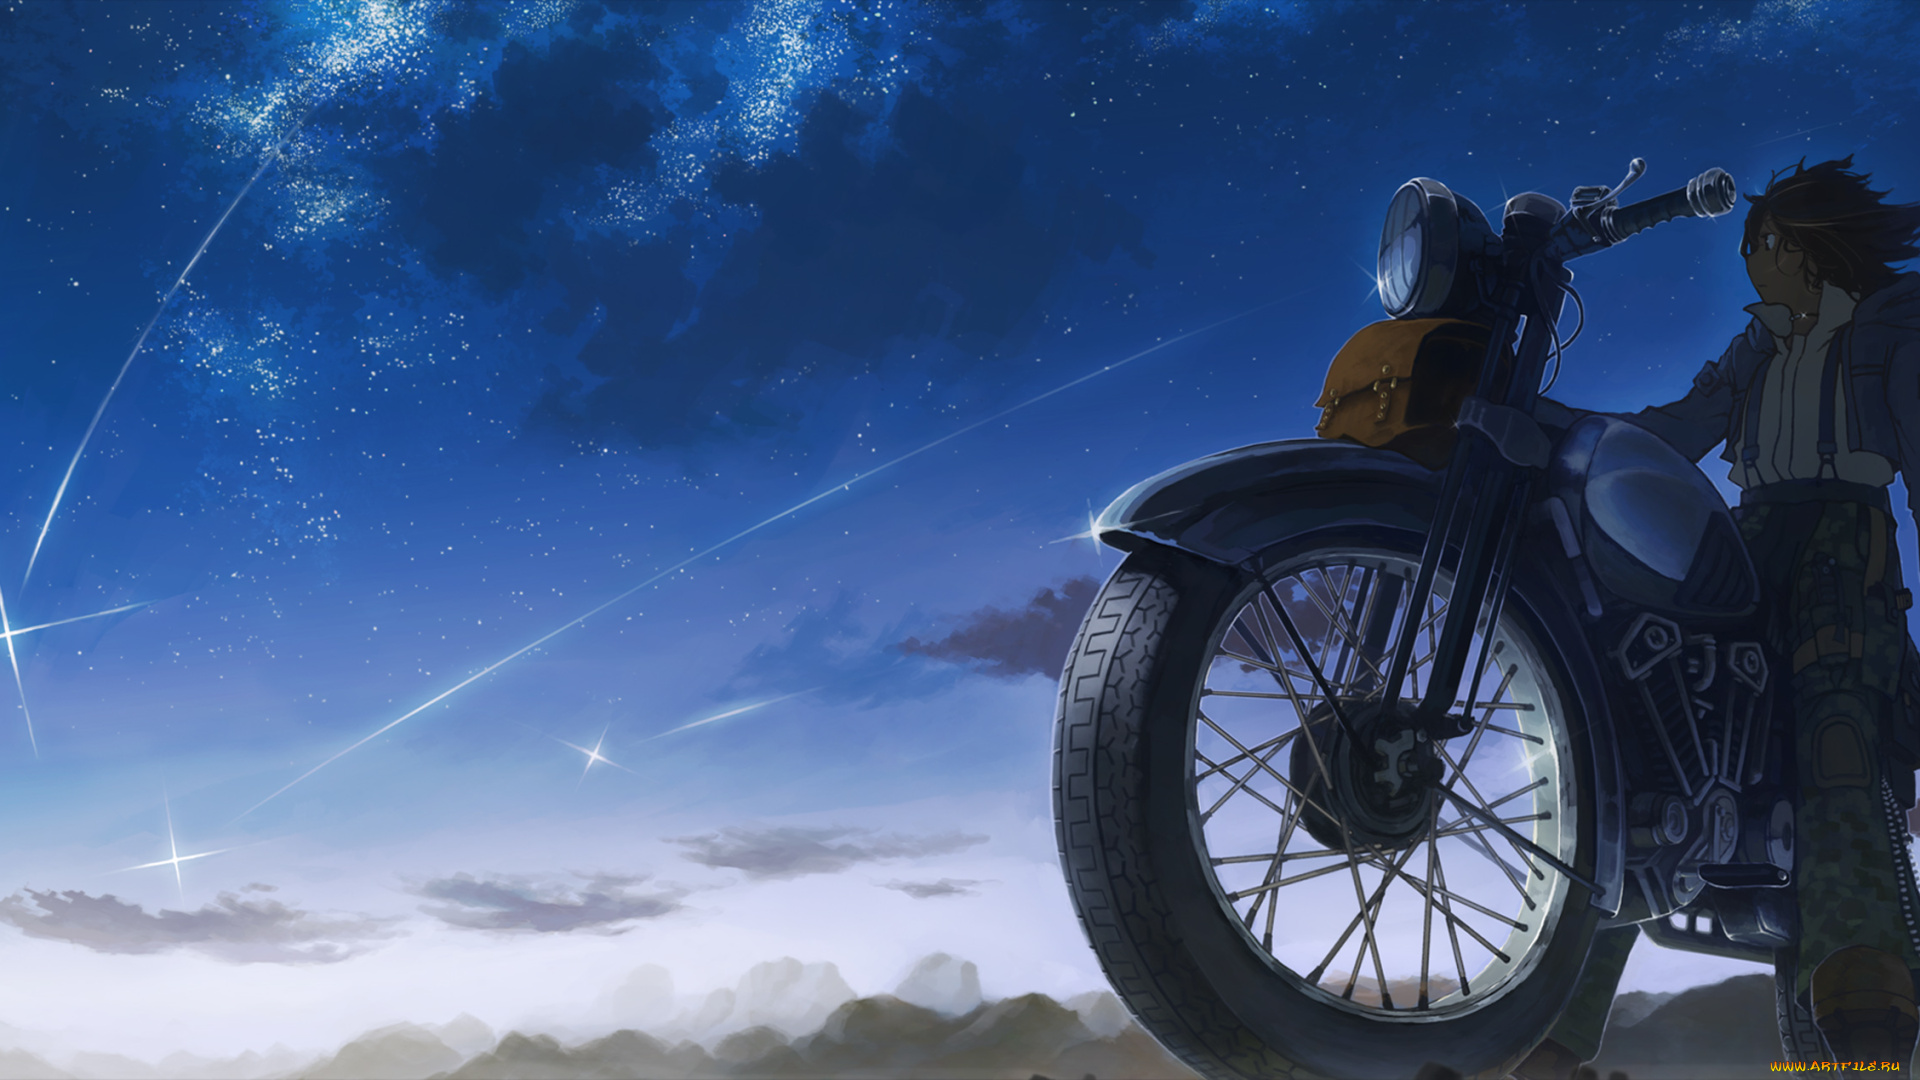 by, hatsuga, dmaigmai, аниме, *unknown, другое, сумерки, небо, облака, звезды, падение, мотоцикл, парень, сумка, горы, шлем